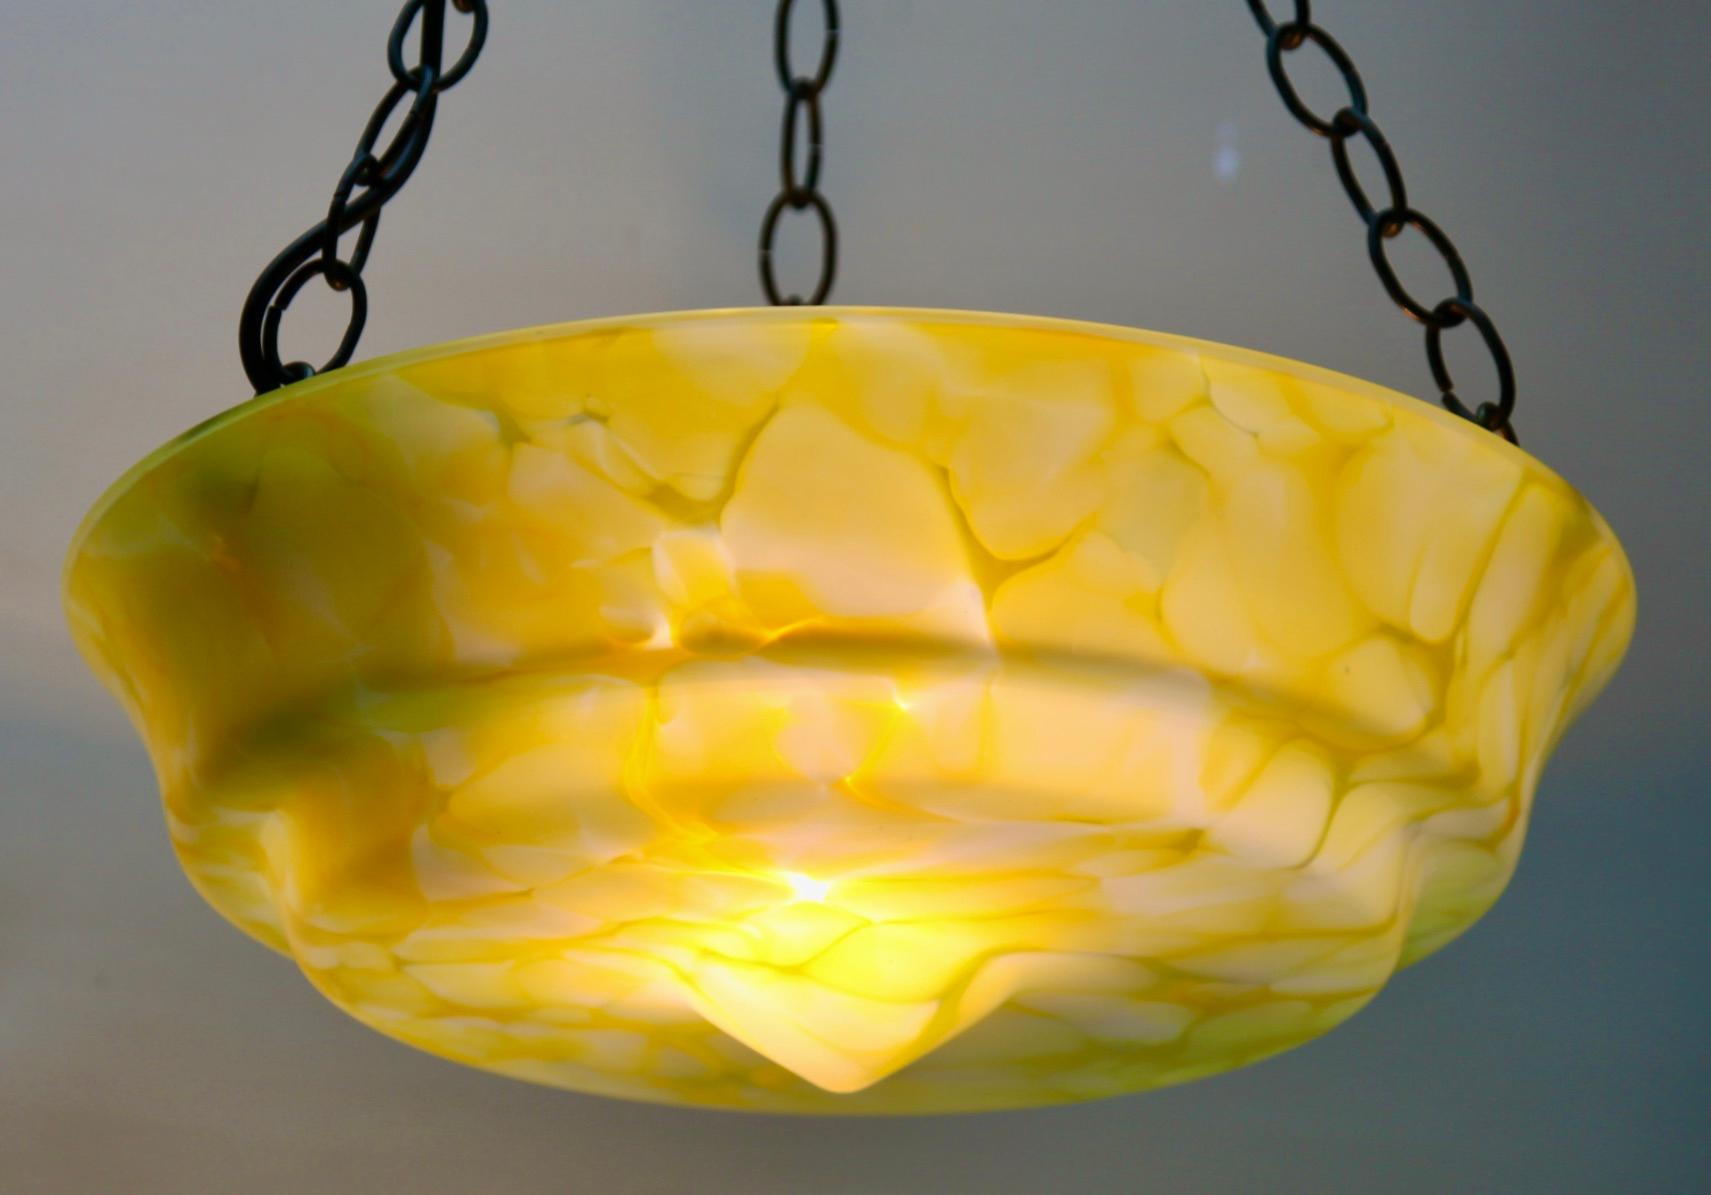 Art Deco Ceiling Lamp, Scailmont Belgium Glass Shade, 1930s For Sale 1